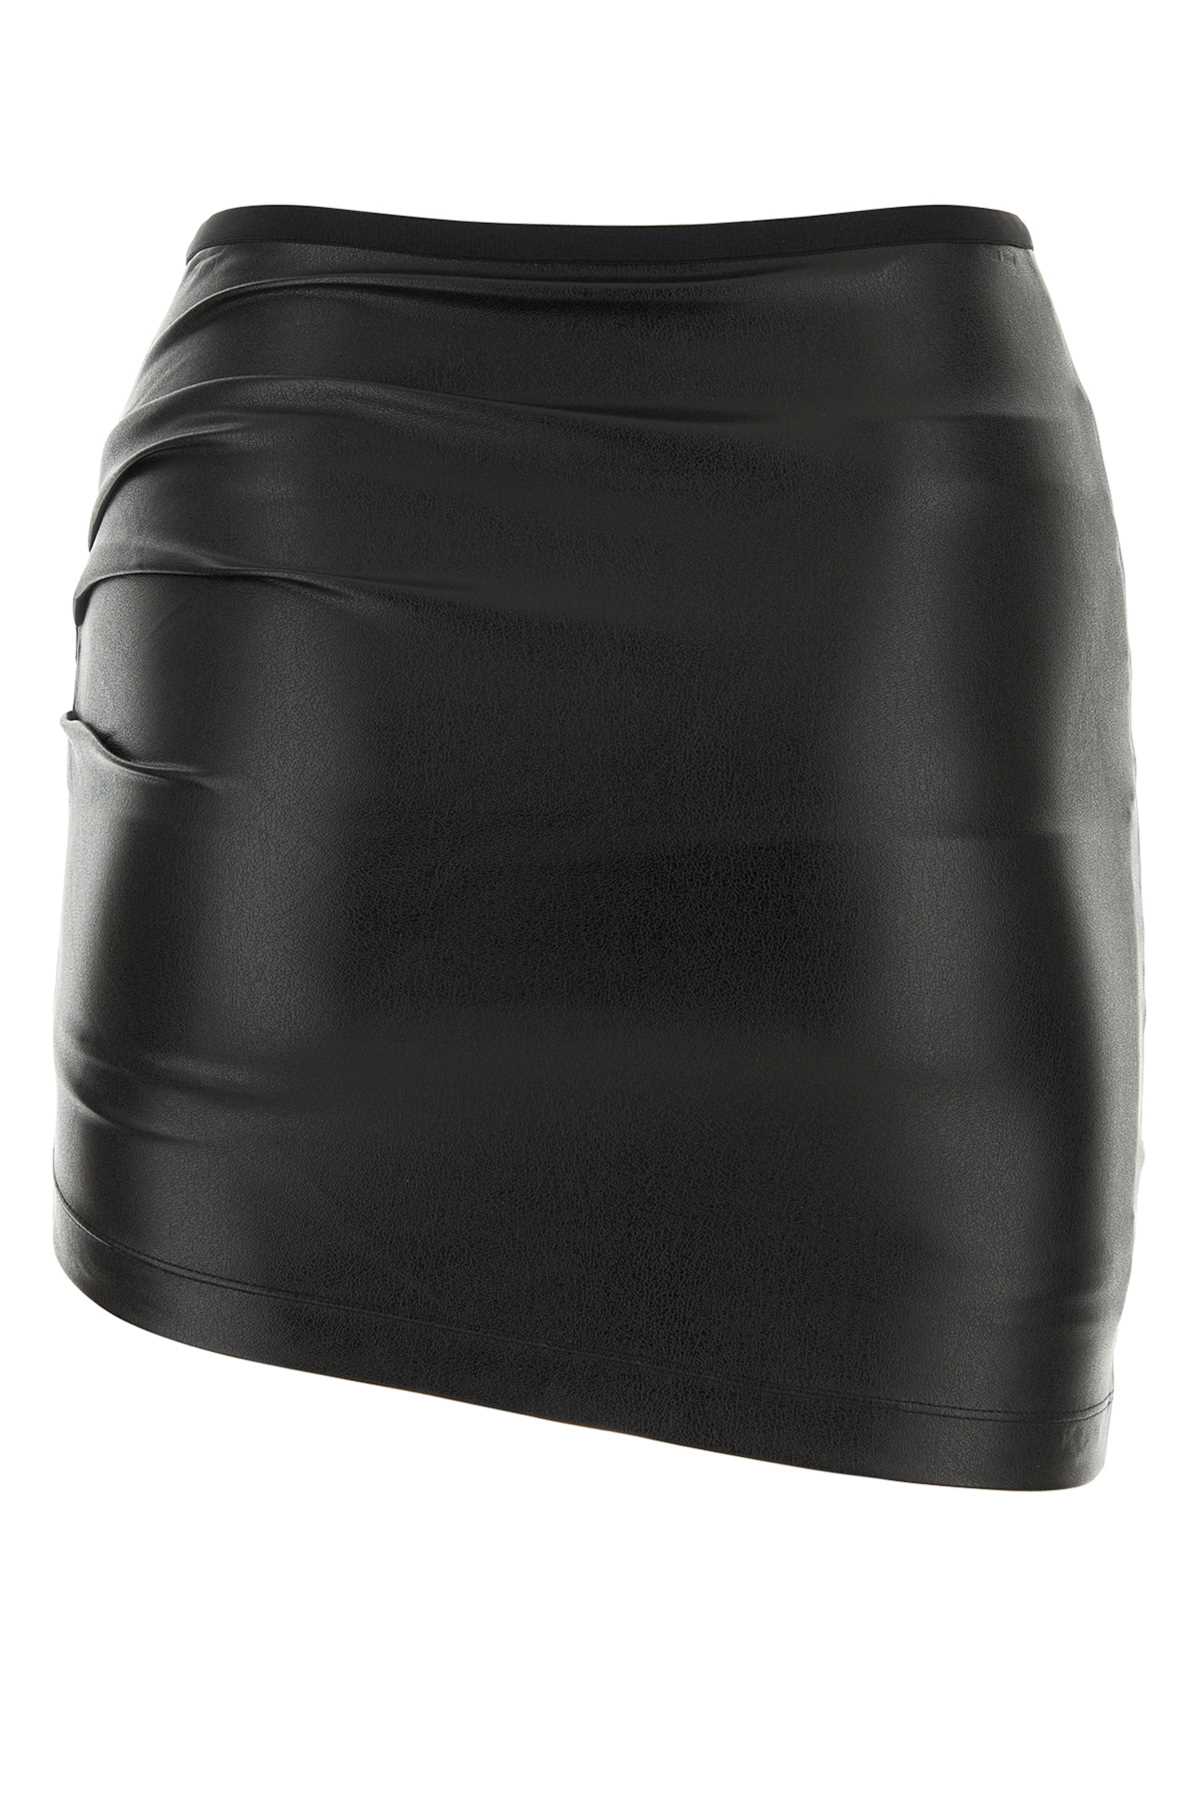 Shop Helmut Lang Black Synthetic Leather Mini Skirt